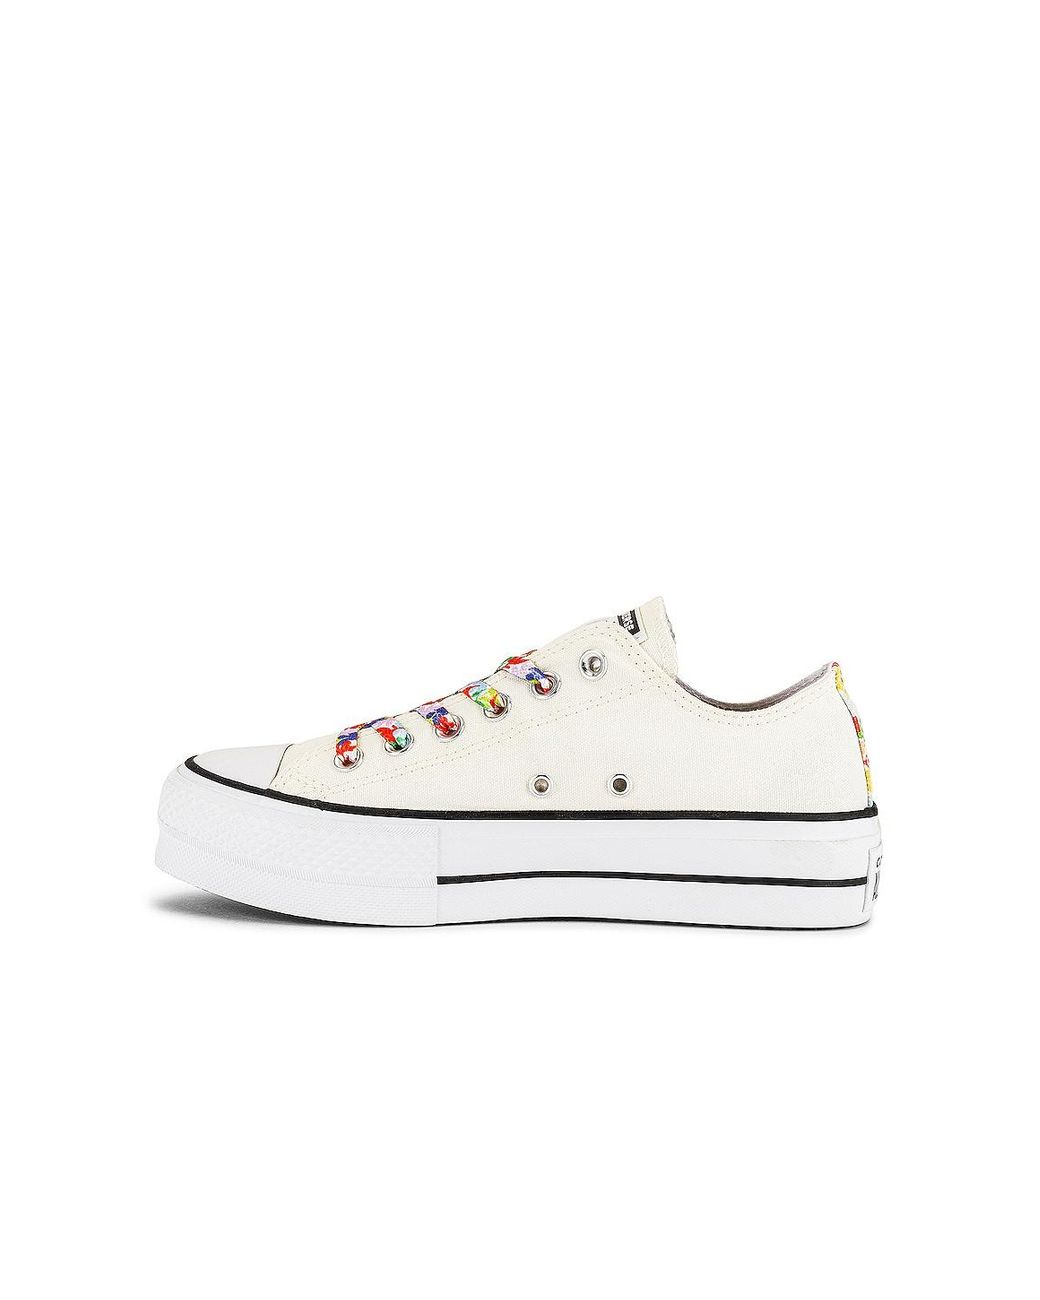 Converse Chuck Taylor All Star Garden Party Platform Sneaker in White | Lyst